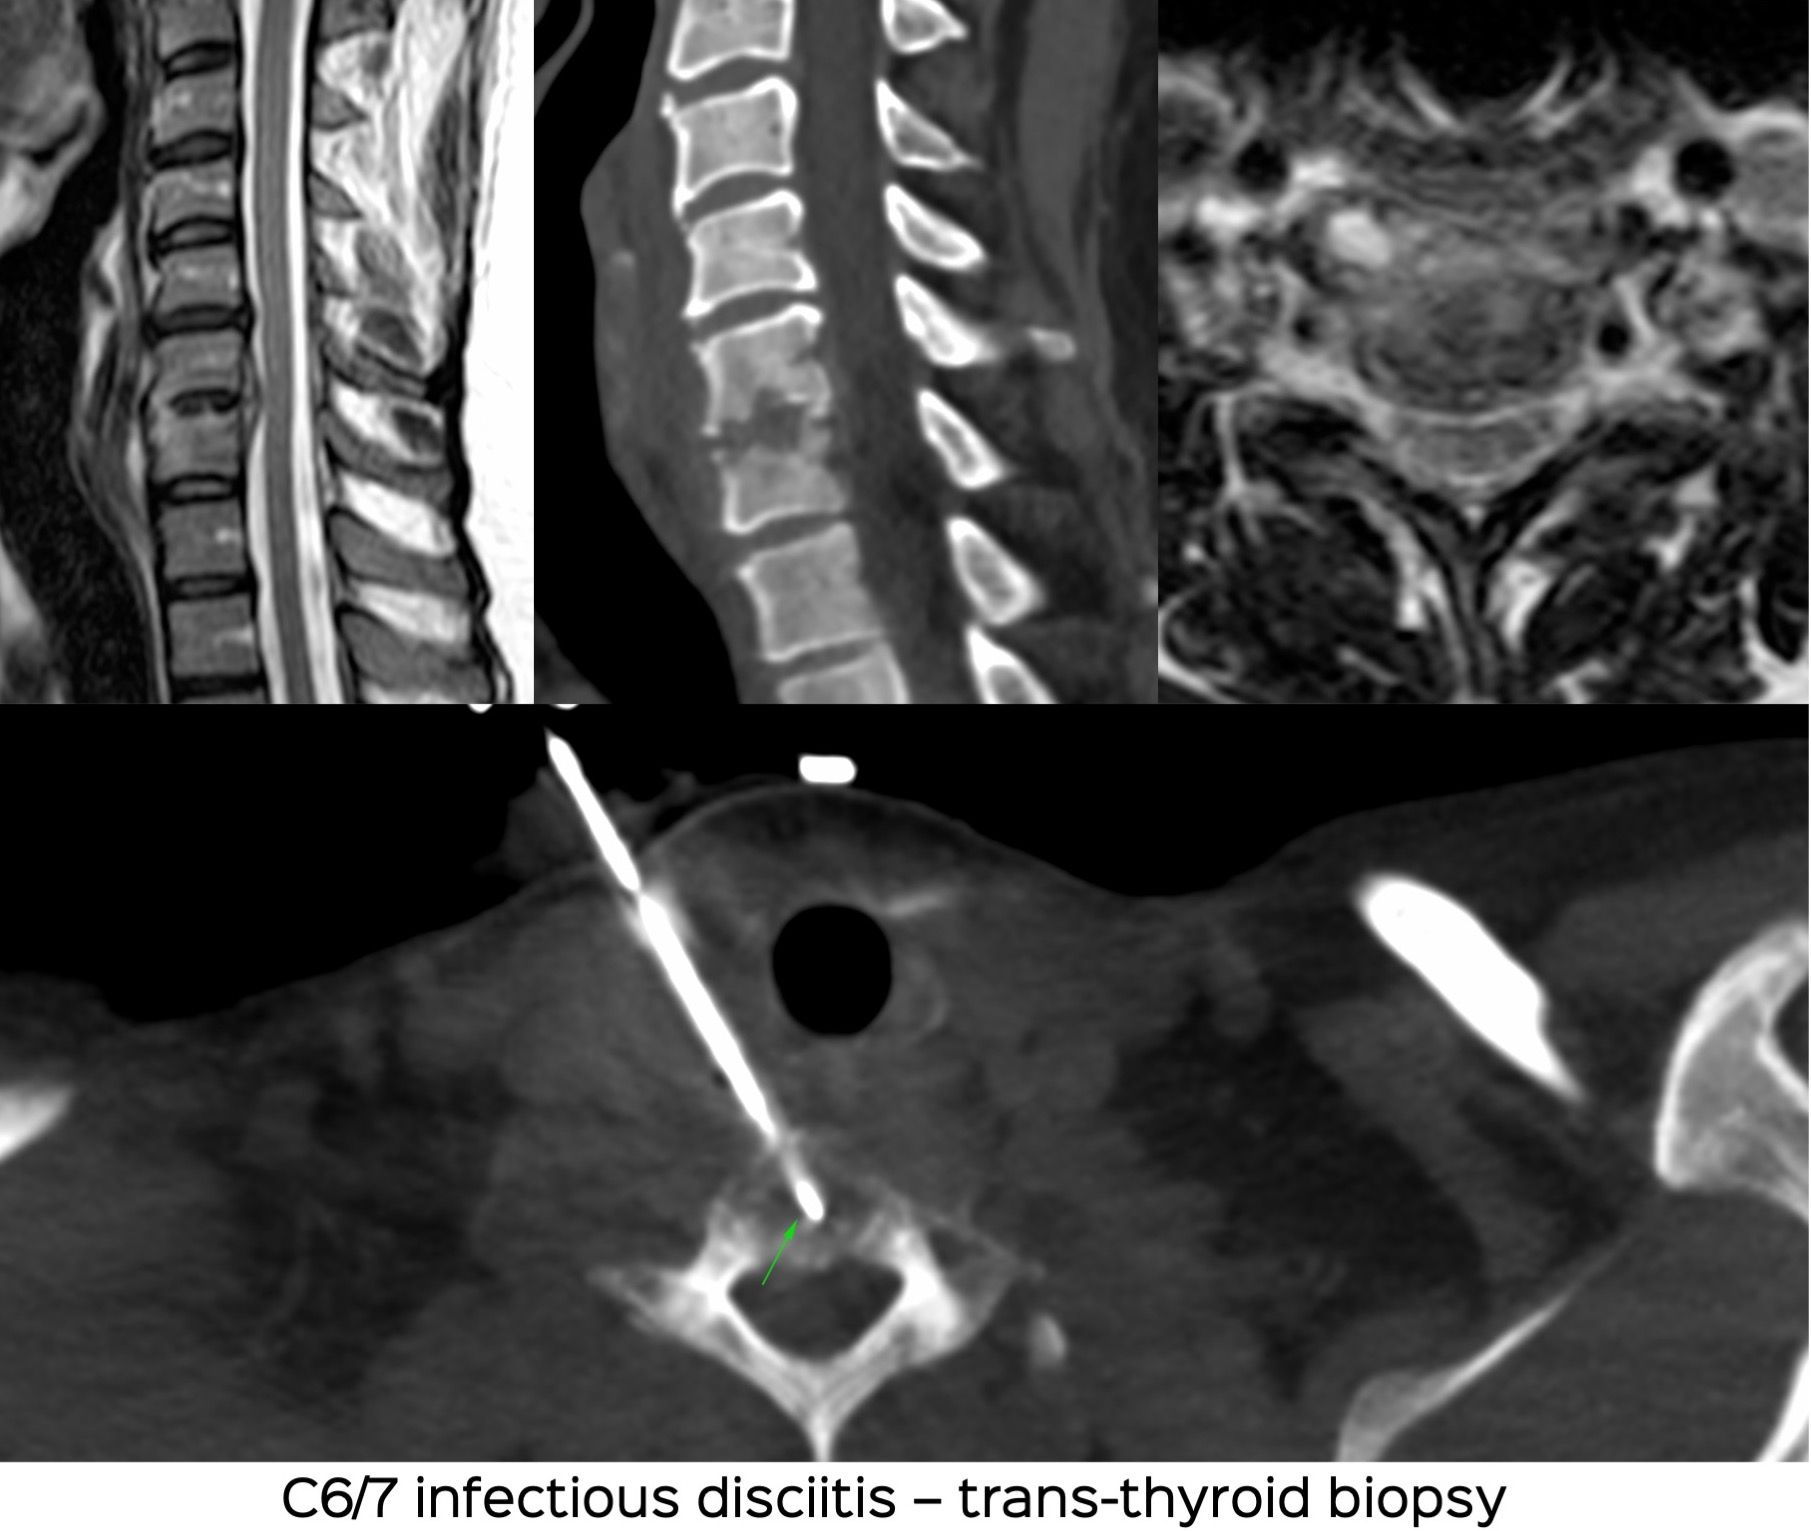 Case 25: Trans-Thyroid Cervical Spine Biopsy for Infective Disciitis